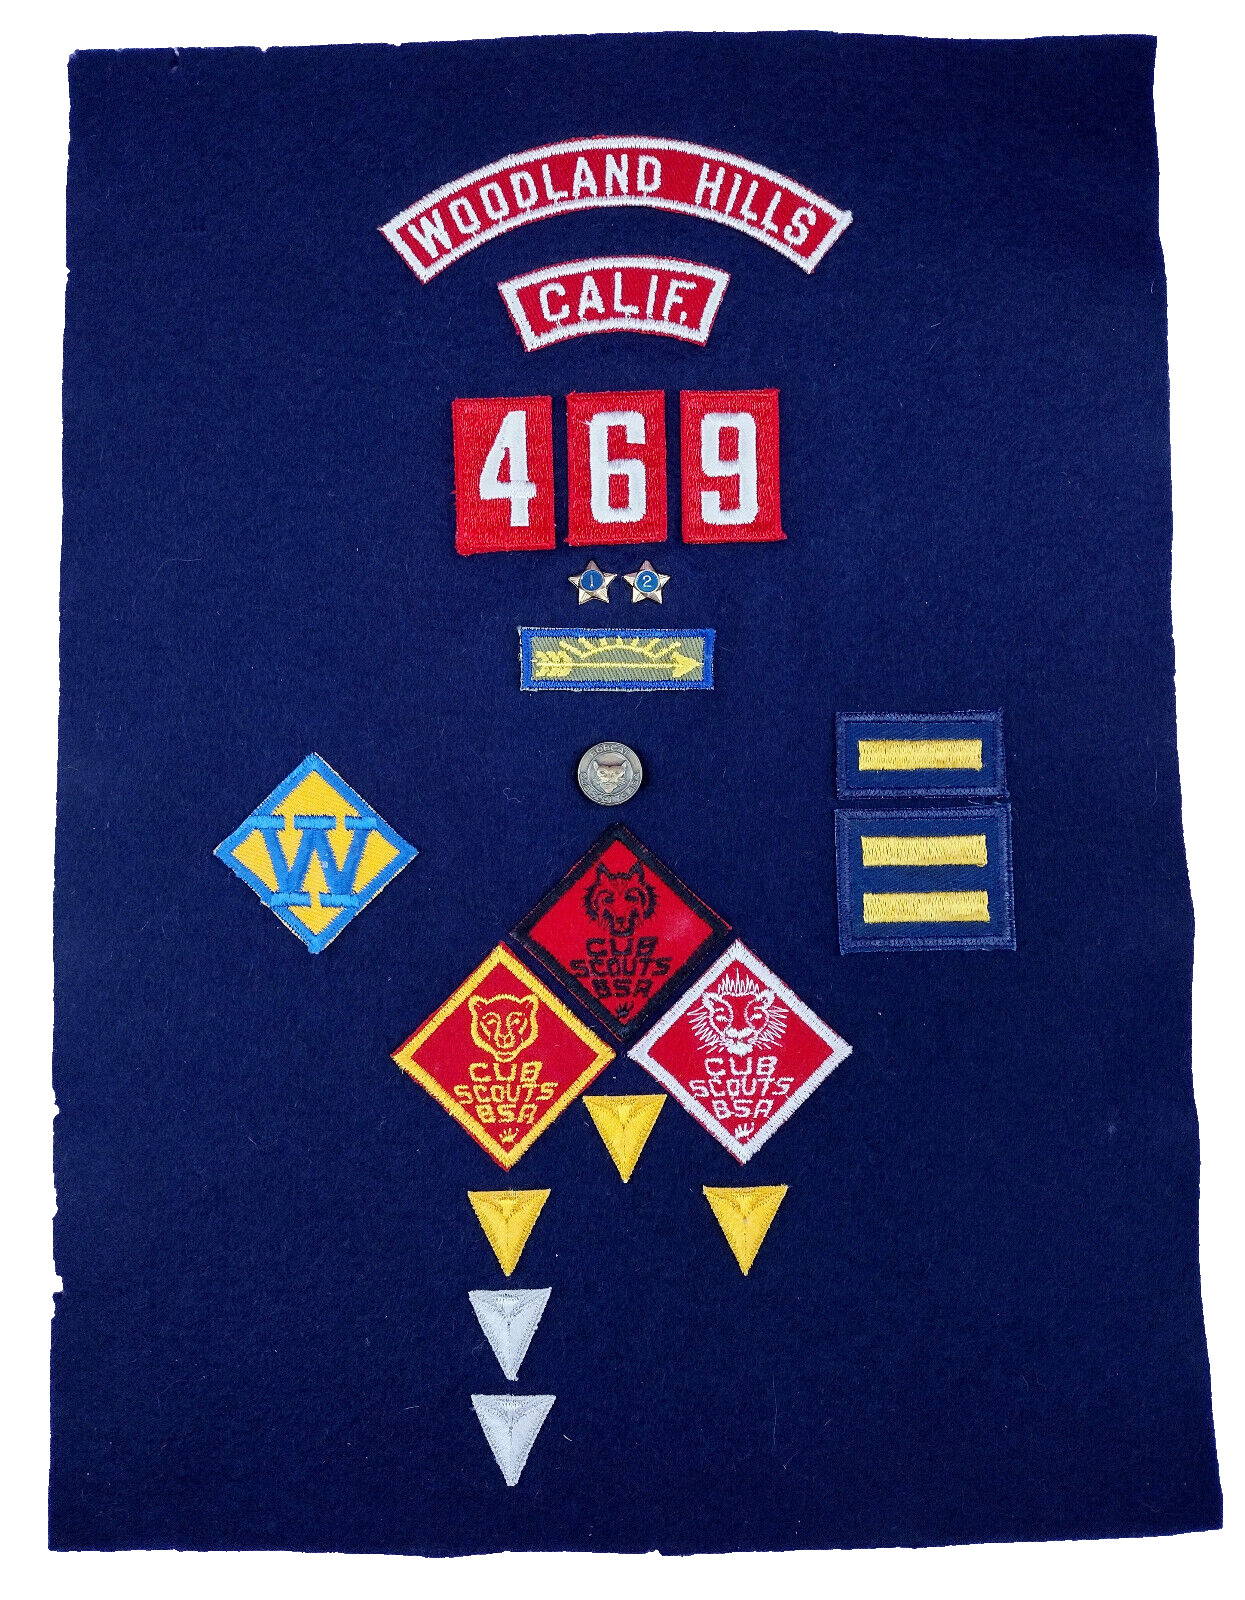 Cub Scouts BSA Merit Badges Patches Pins Vintage Arrow Stars Woodland Hills 469